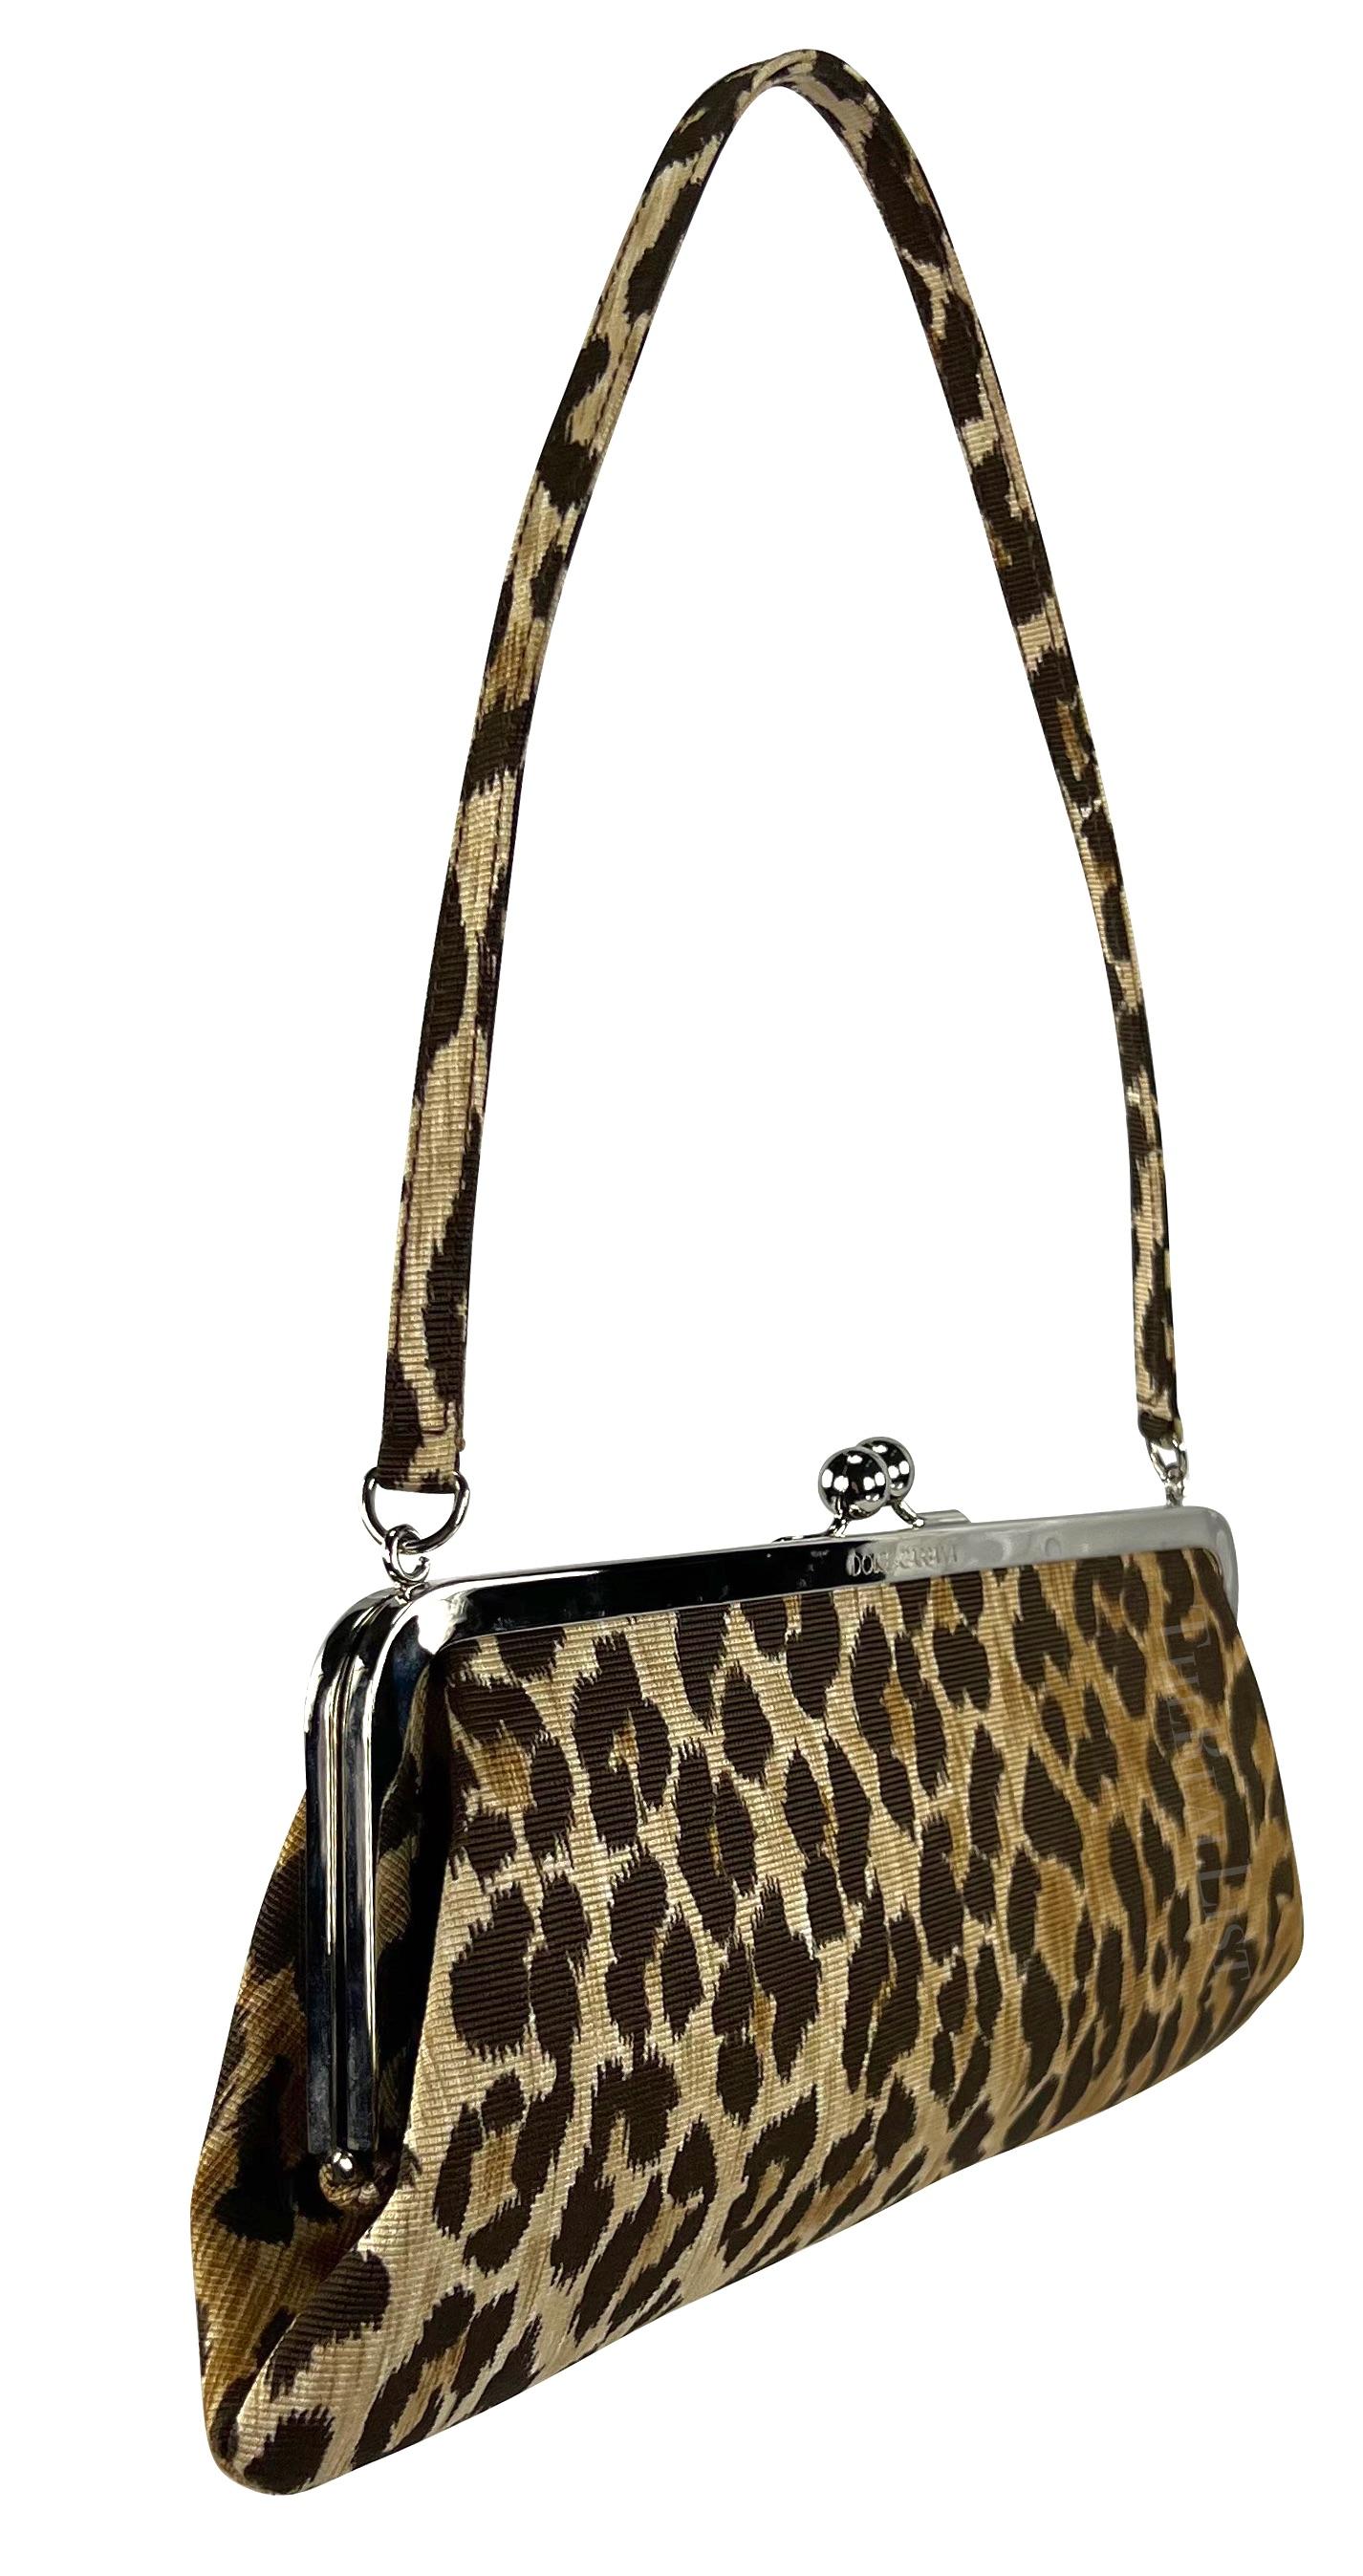 S/S 1997 Dolce & Gabbana Runway Cheetah Print Fabric Evening Shoulder Bag 5